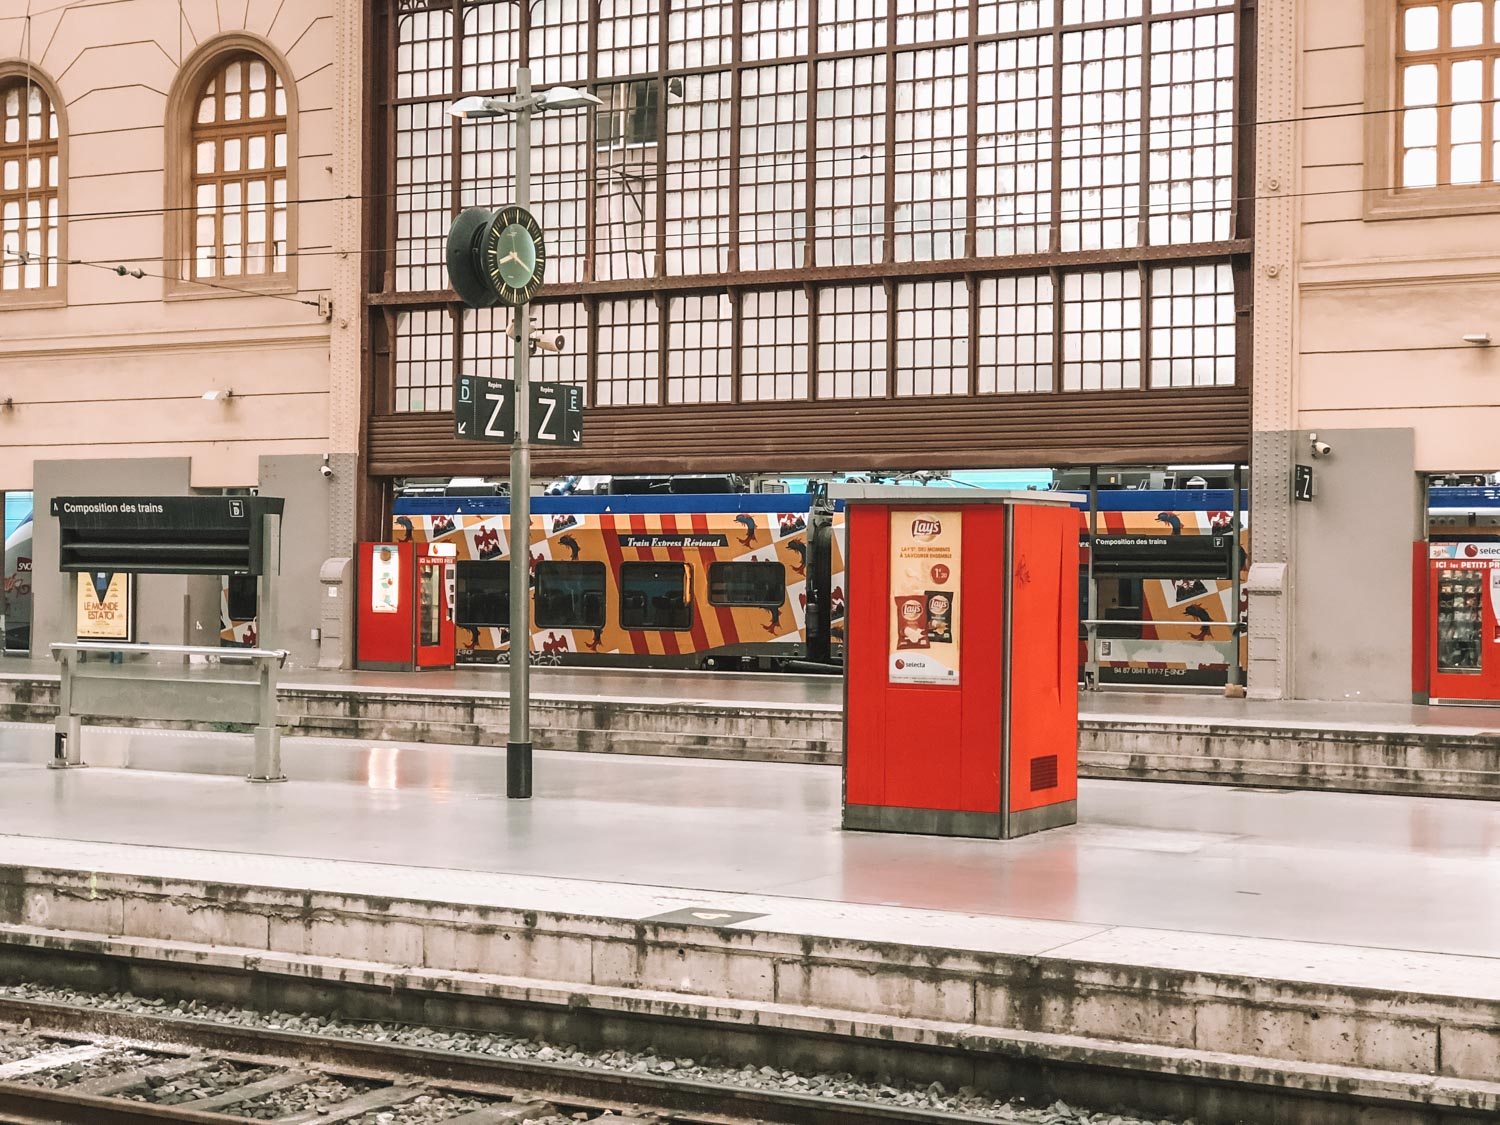 Train in France